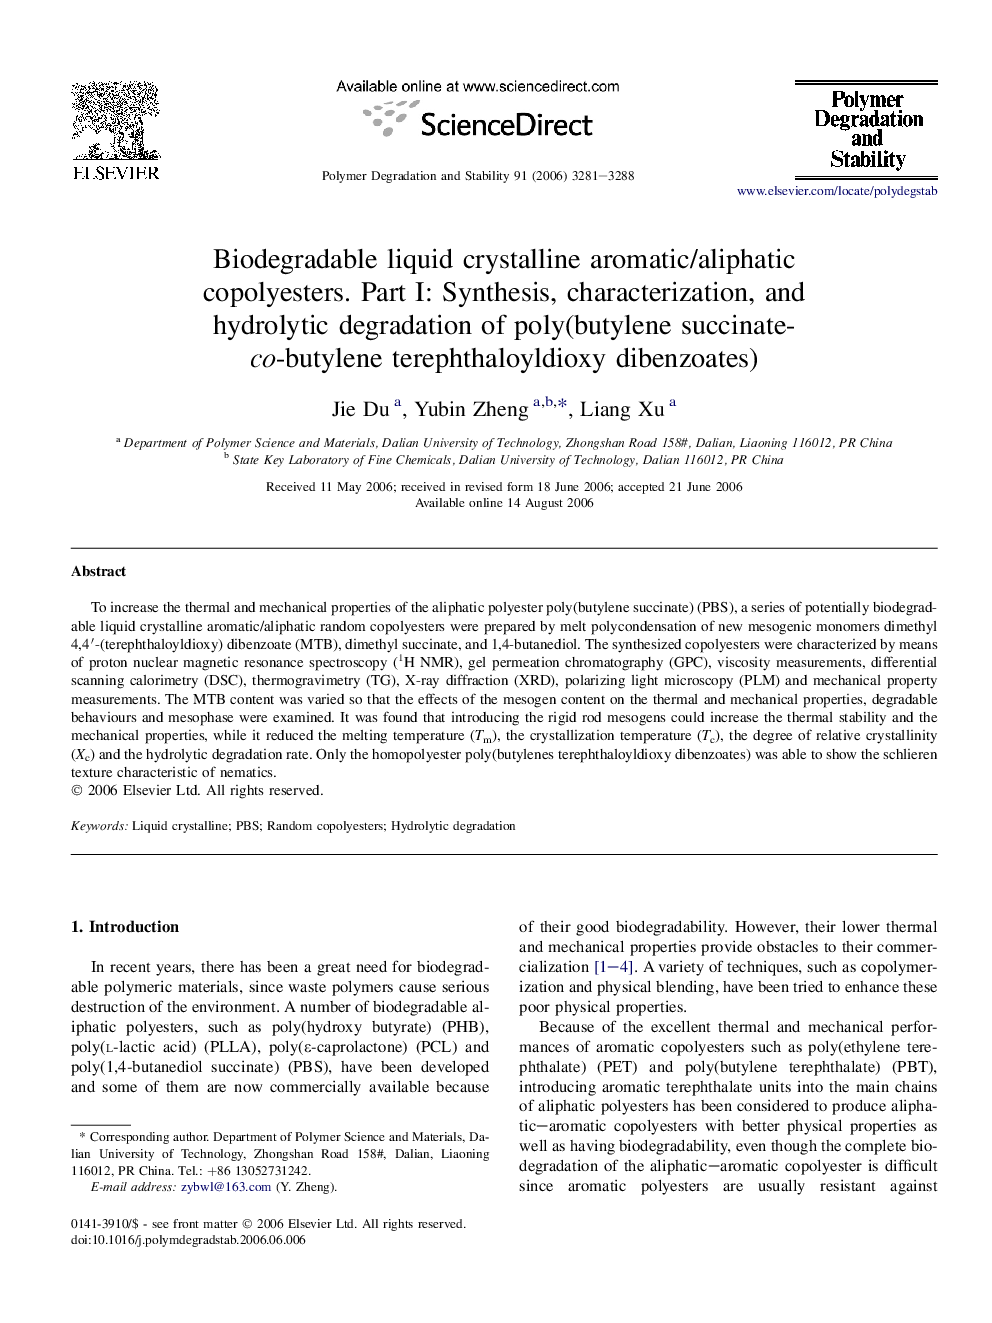 Biodegradable liquid crystalline aromatic/aliphatic copolyesters. Part I: Synthesis, characterization, and hydrolytic degradation of poly(butylene succinate-co-butylene terephthaloyldioxy dibenzoates)